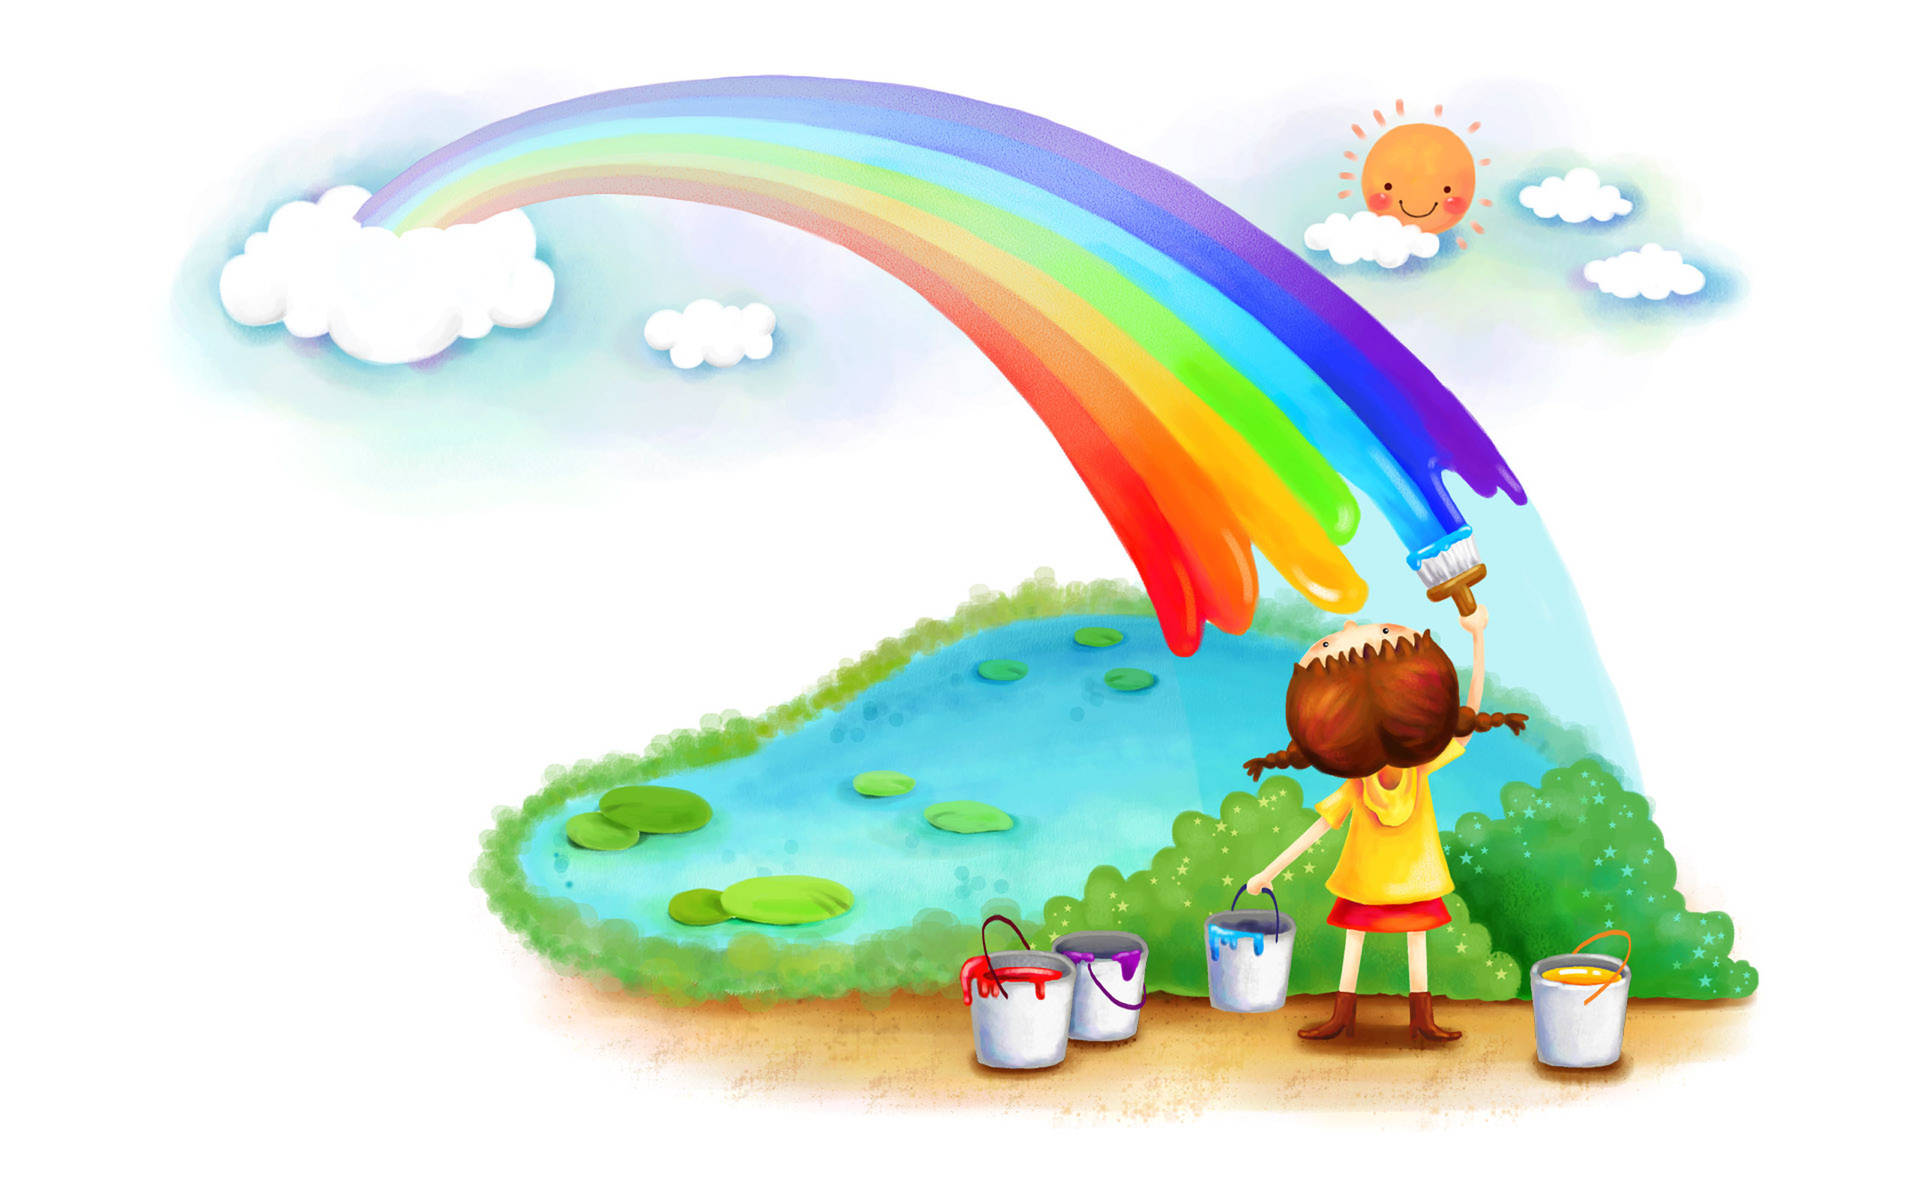 A joyful child painting a vibrant rainbow. Wallpaper